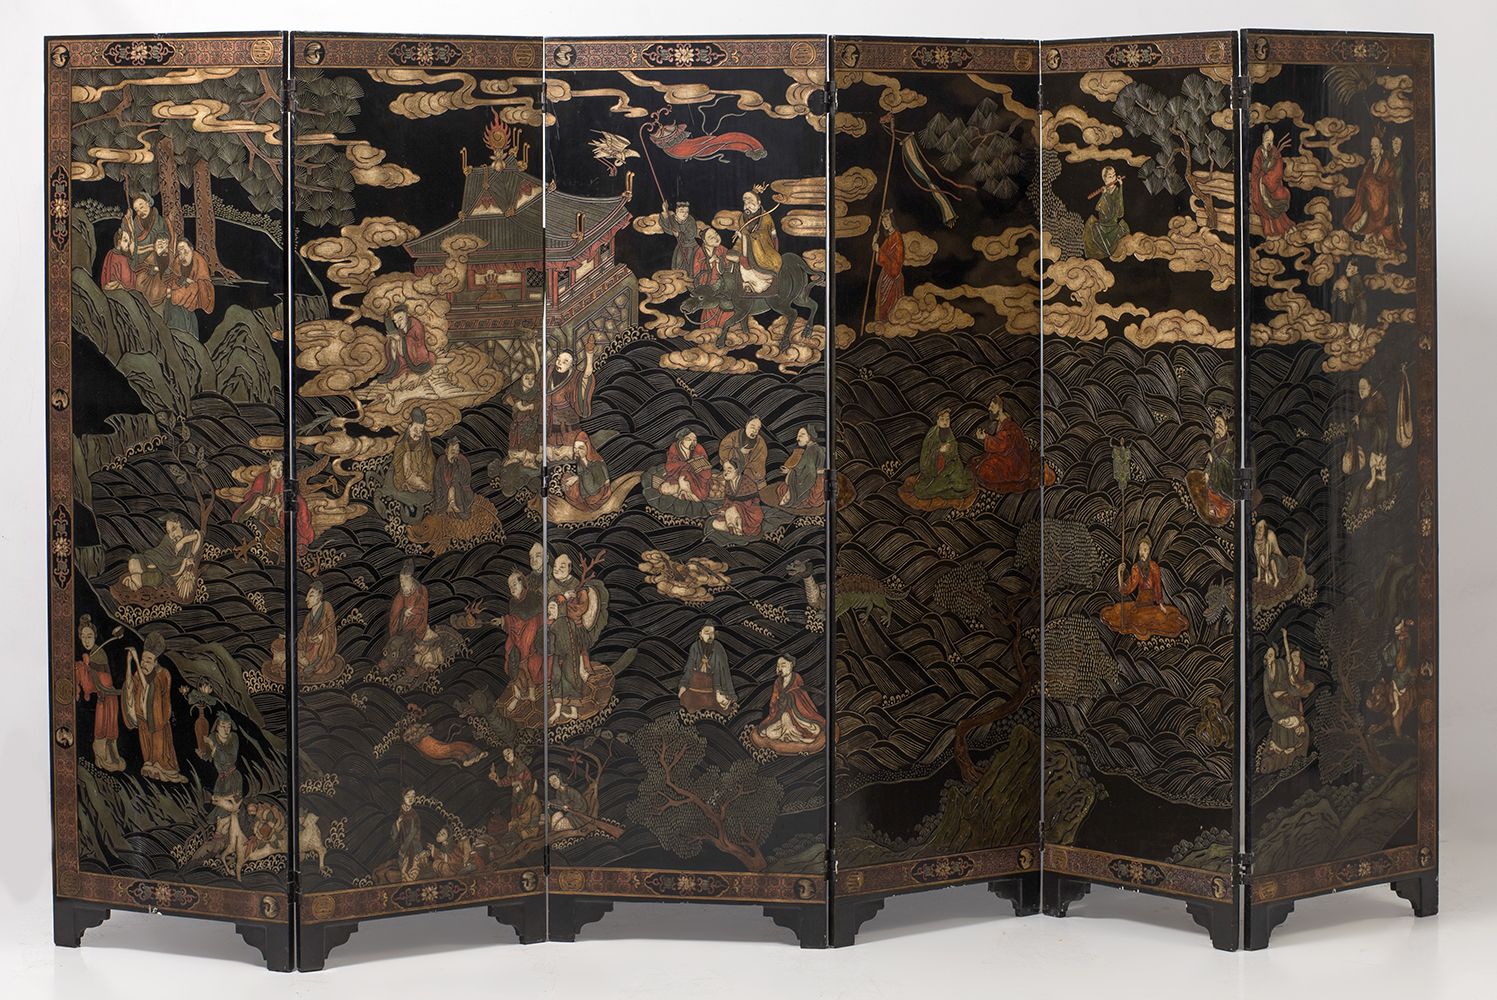 Six-leaf oriental folding screen 中国漆器六叶屏风，正面有宫廷场景的装饰，背面有花鸟图案。20世纪。176 x 55 厘米。